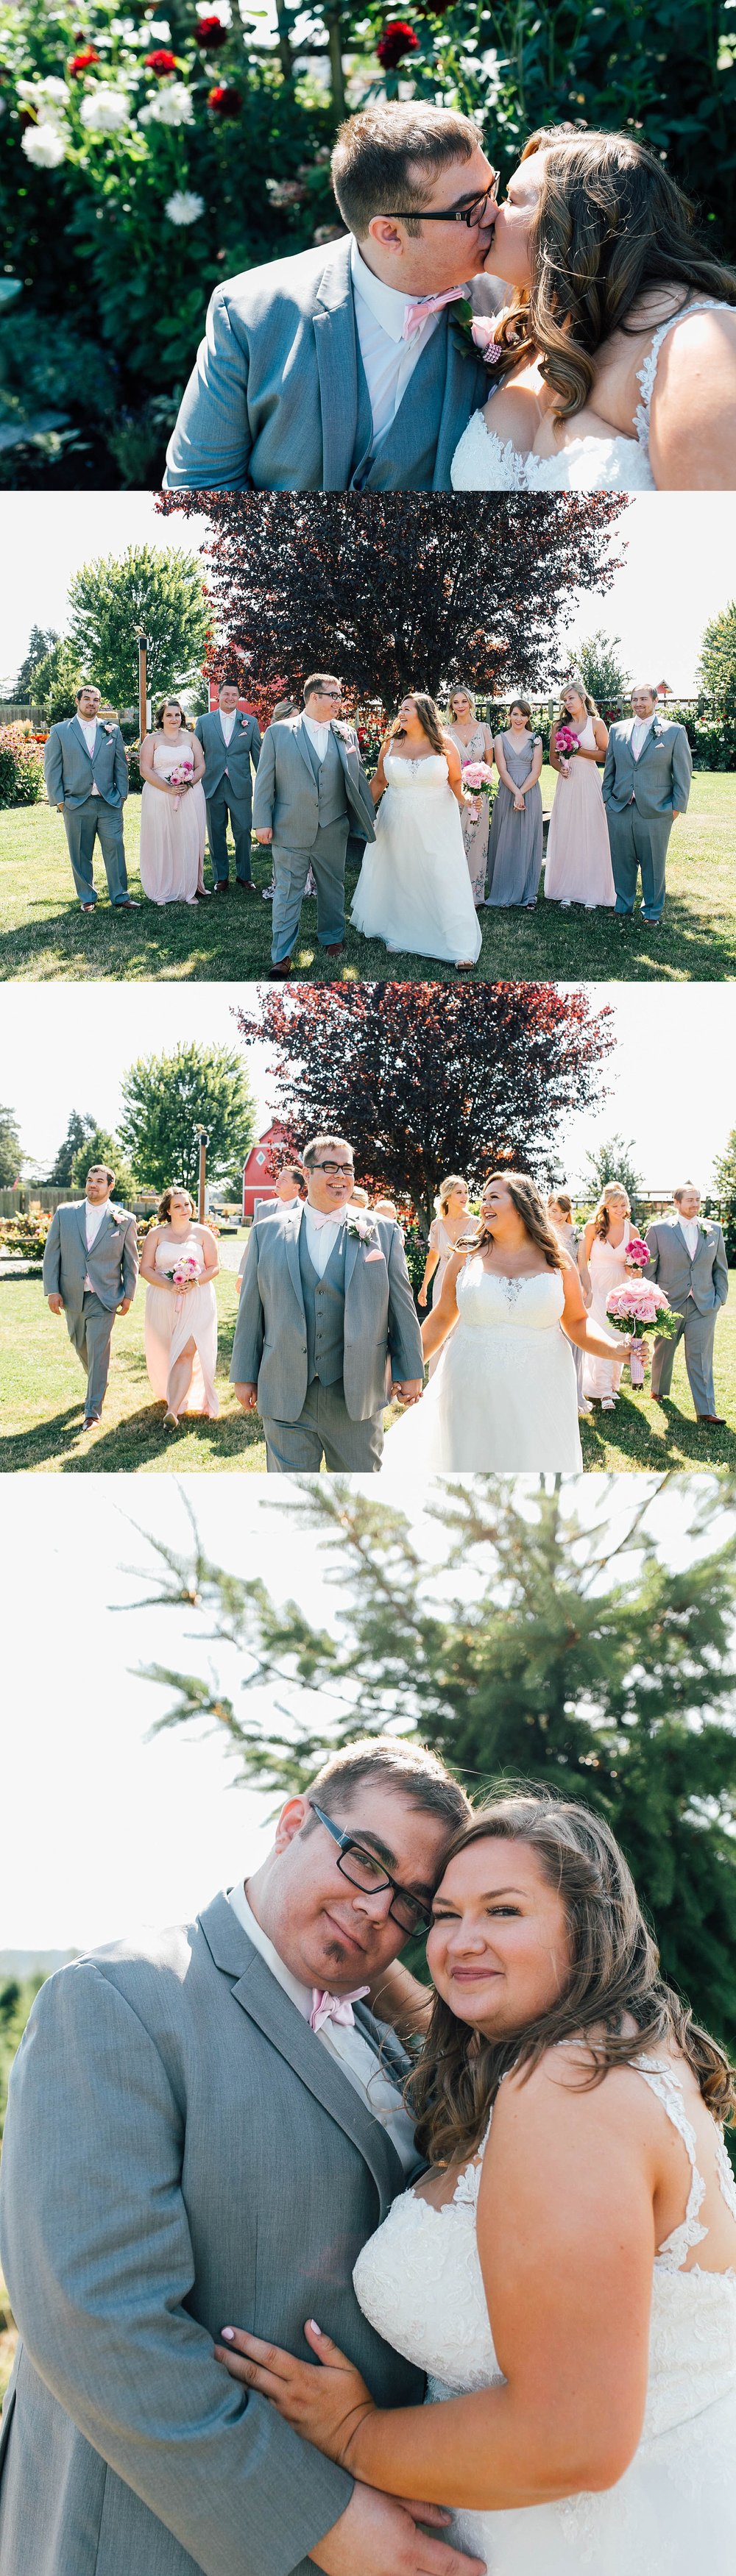 Stocker Farms Wedding Photographer Seattle Wedding Photography Katie and Kyle - Ashley Vos Photography-4.jpg